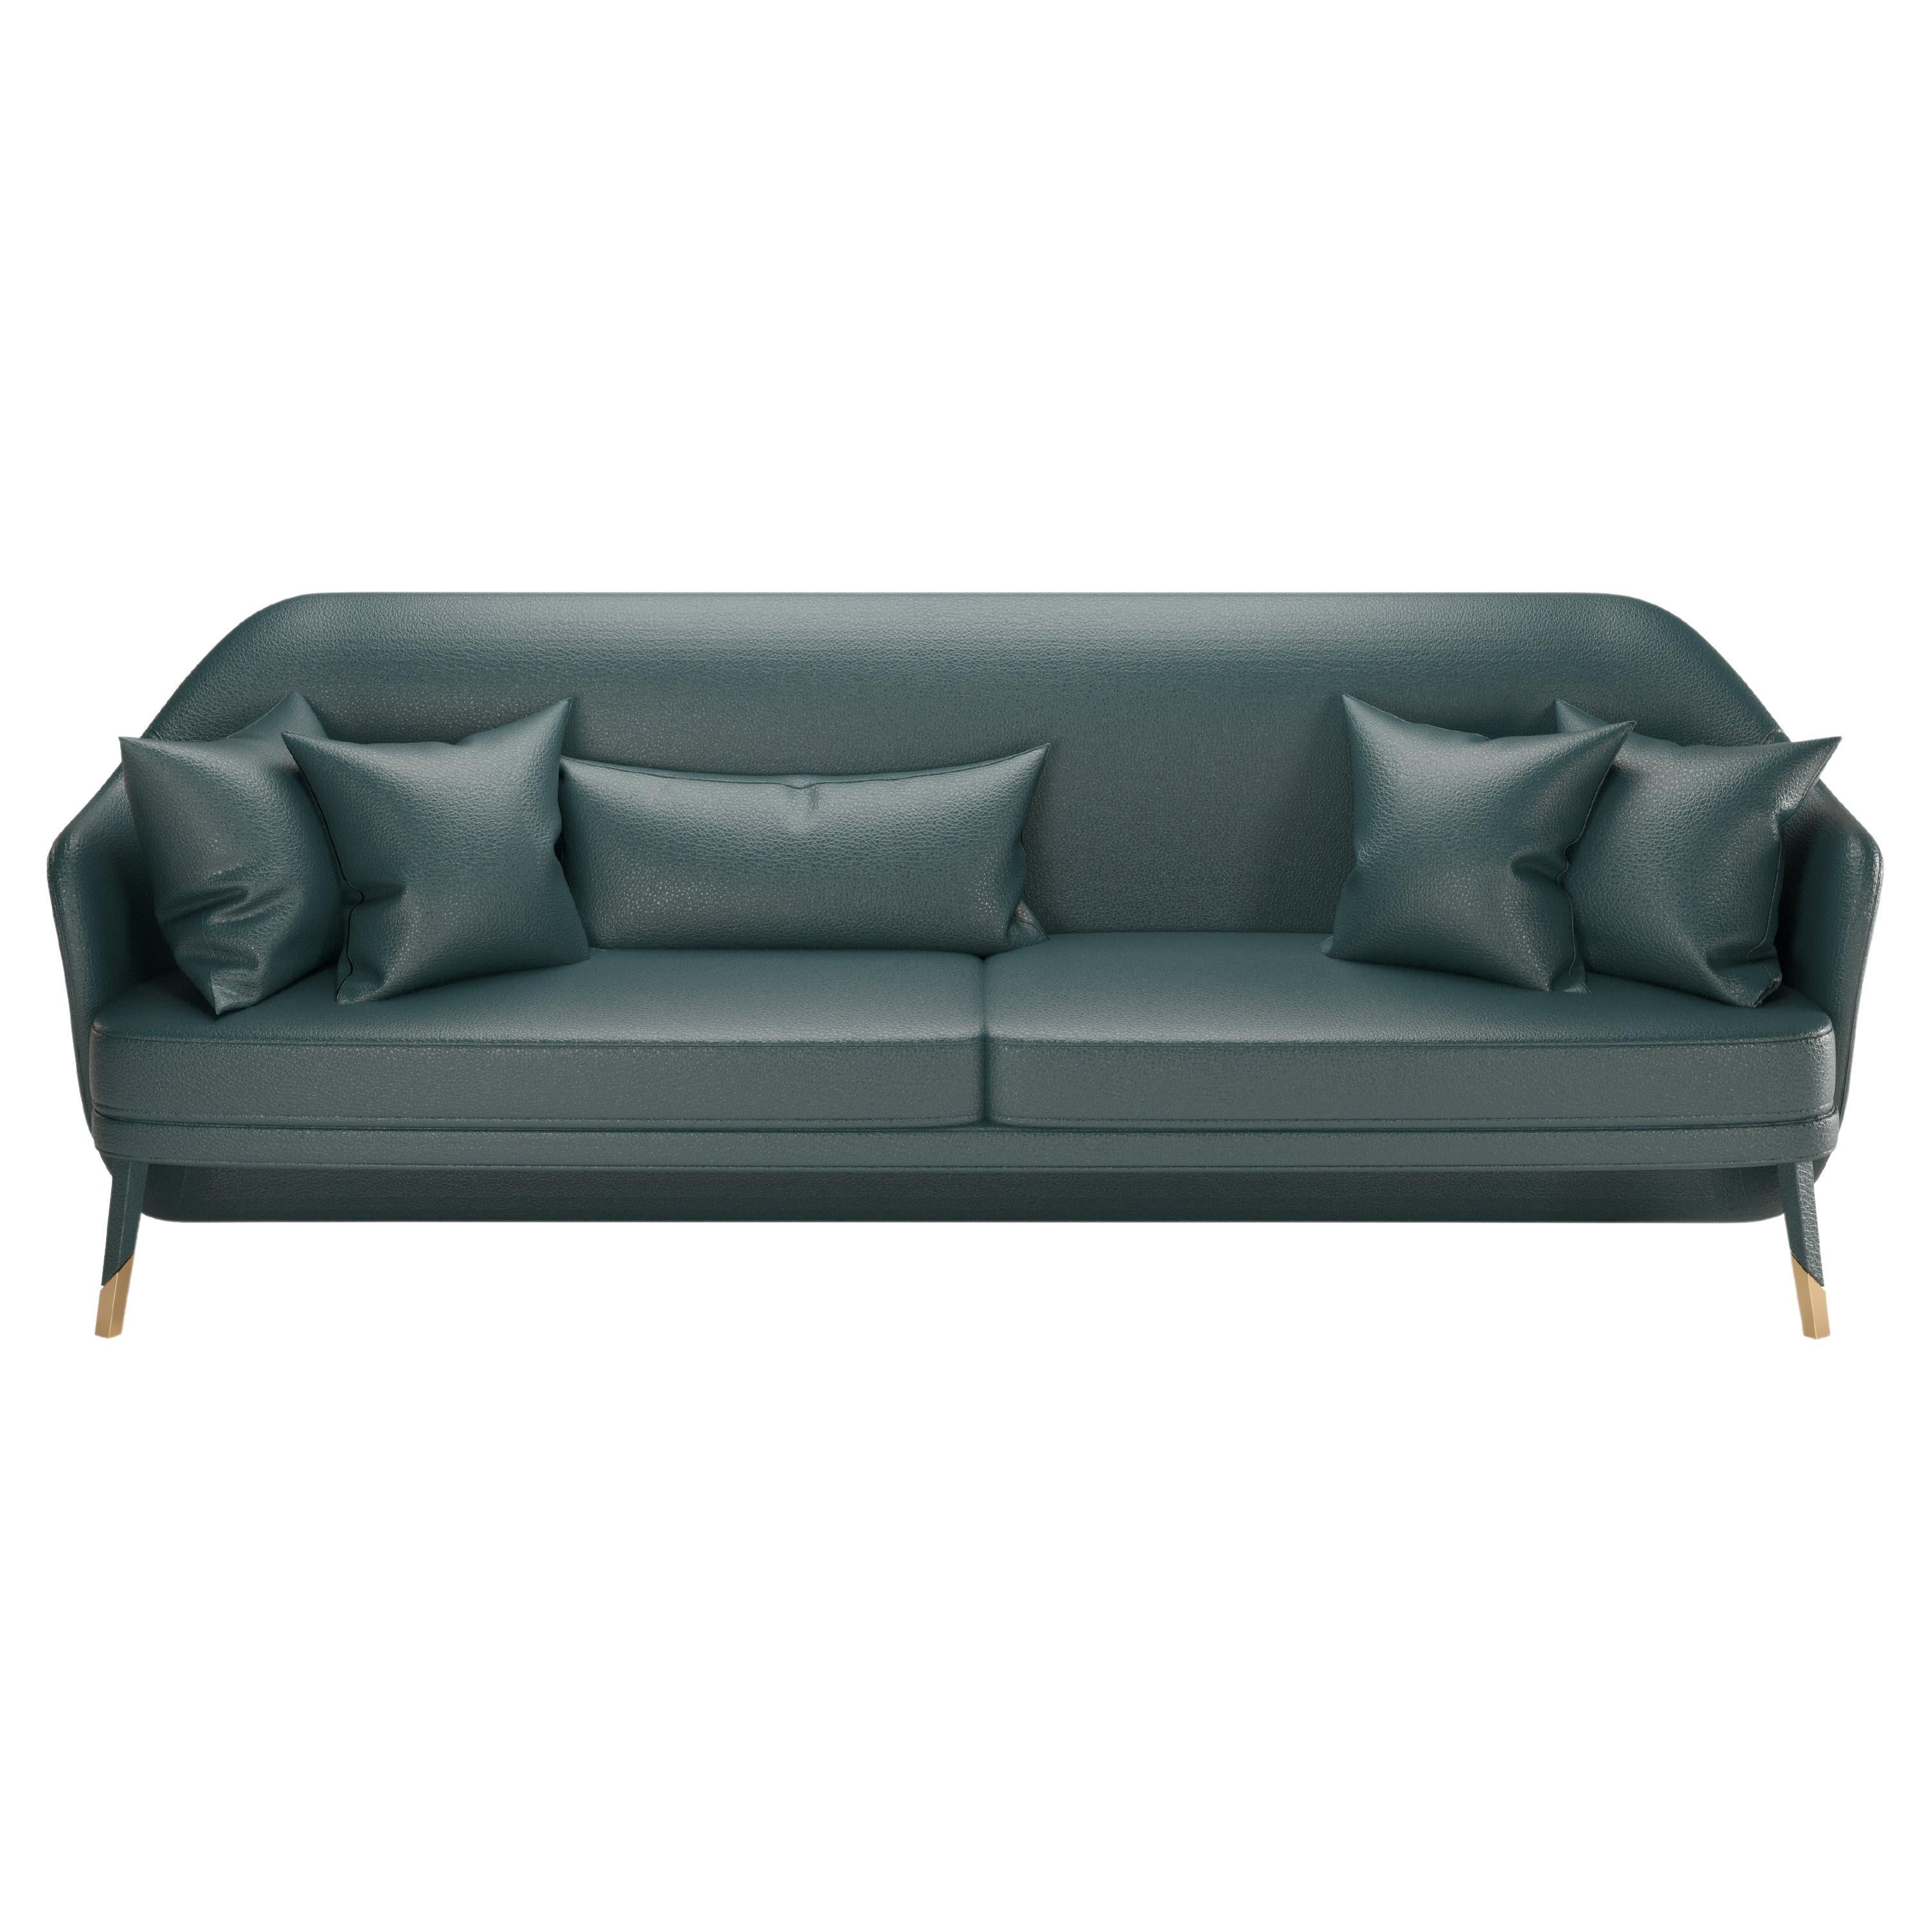 Blue Petrol Leather Modern Bhutan Sofa